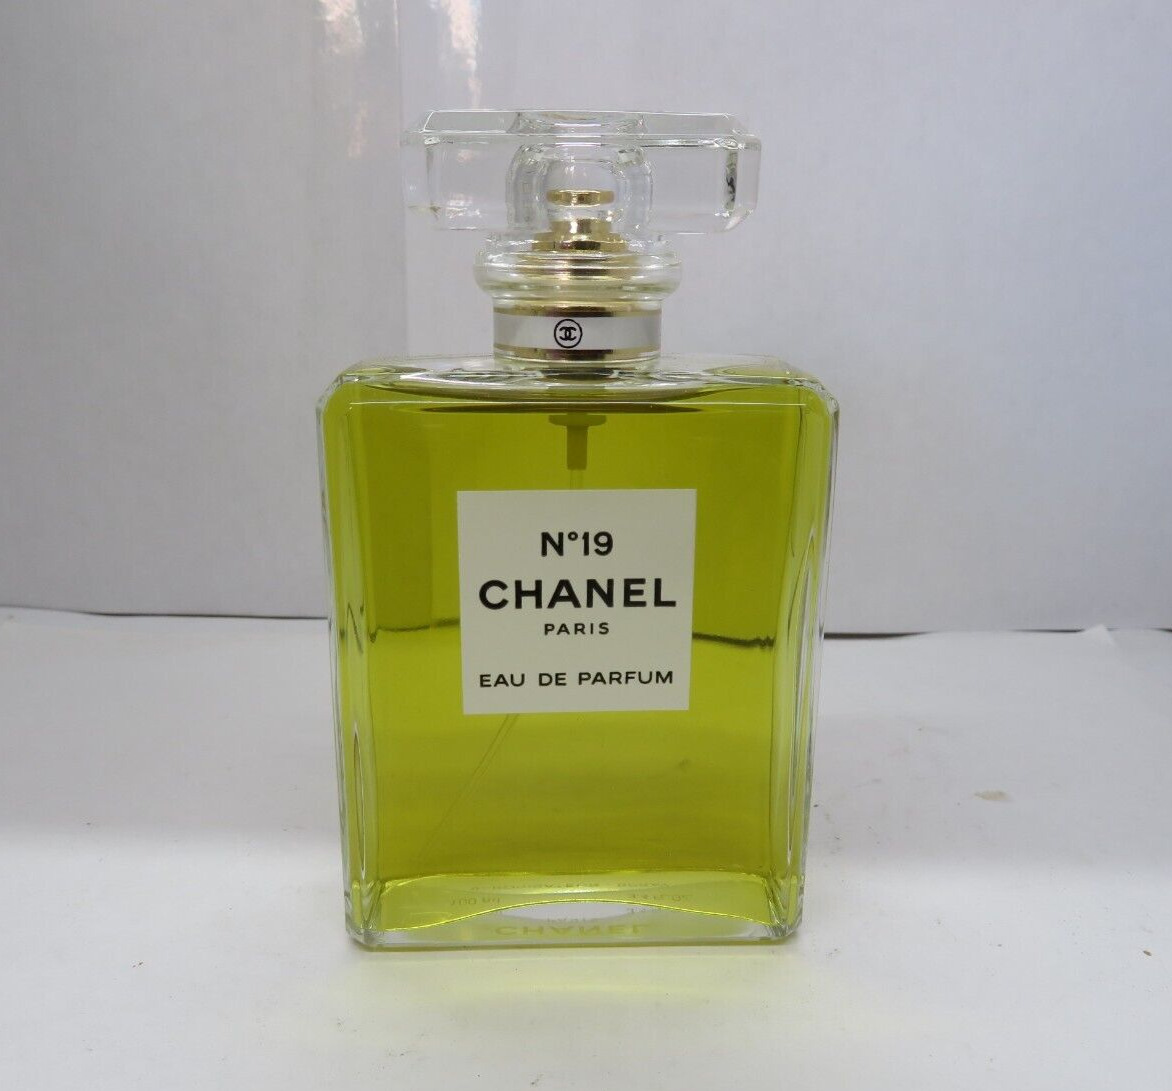 Chanel Chance Eau De Parfum Spray 50ml/1.7oz 